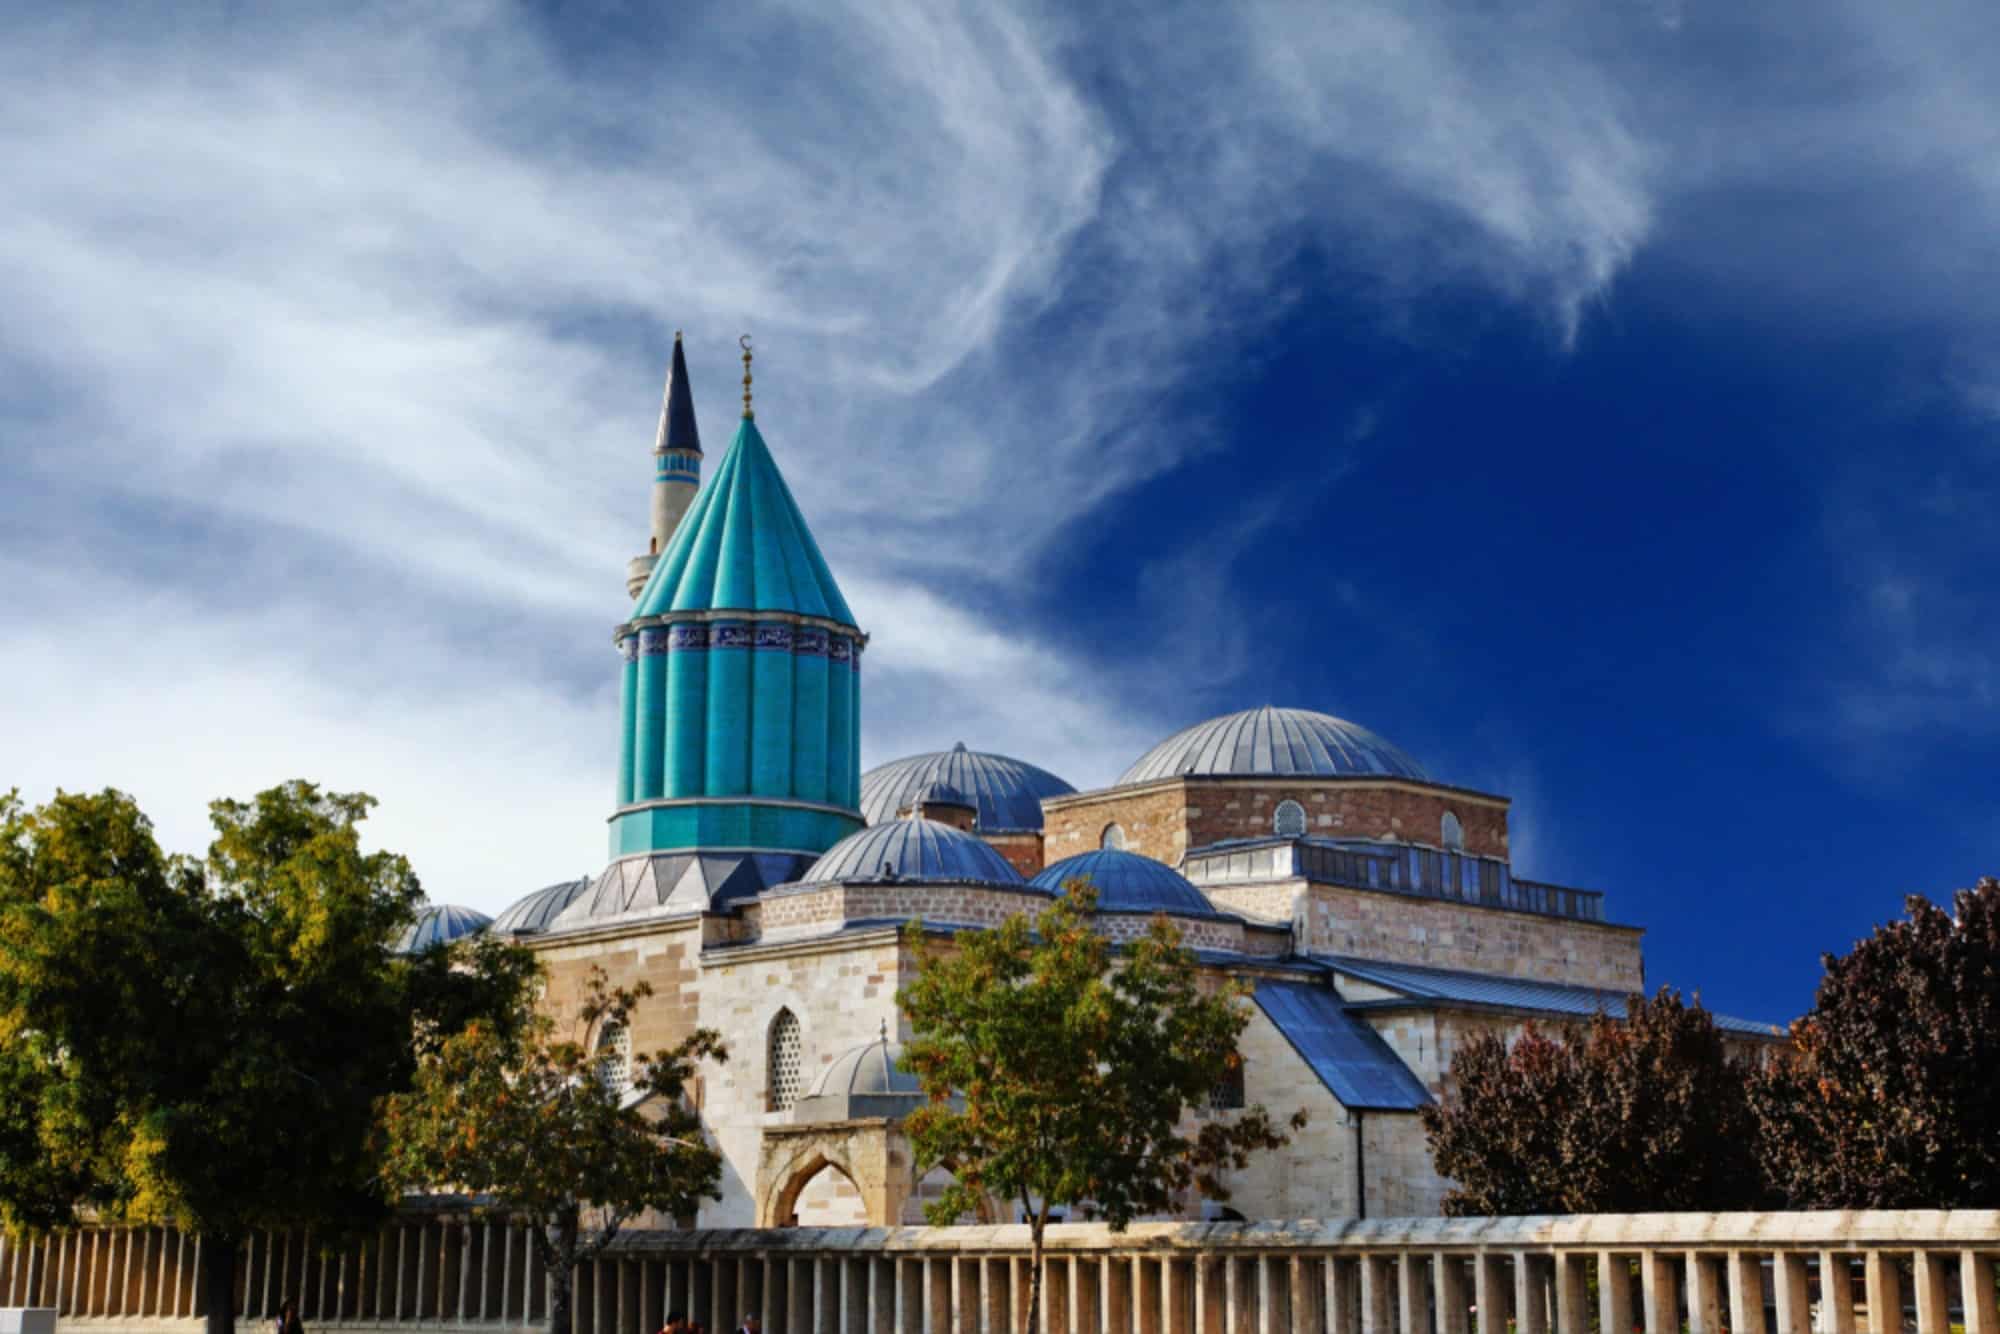 Mevlana Celaddiin-i Rumi Mosque